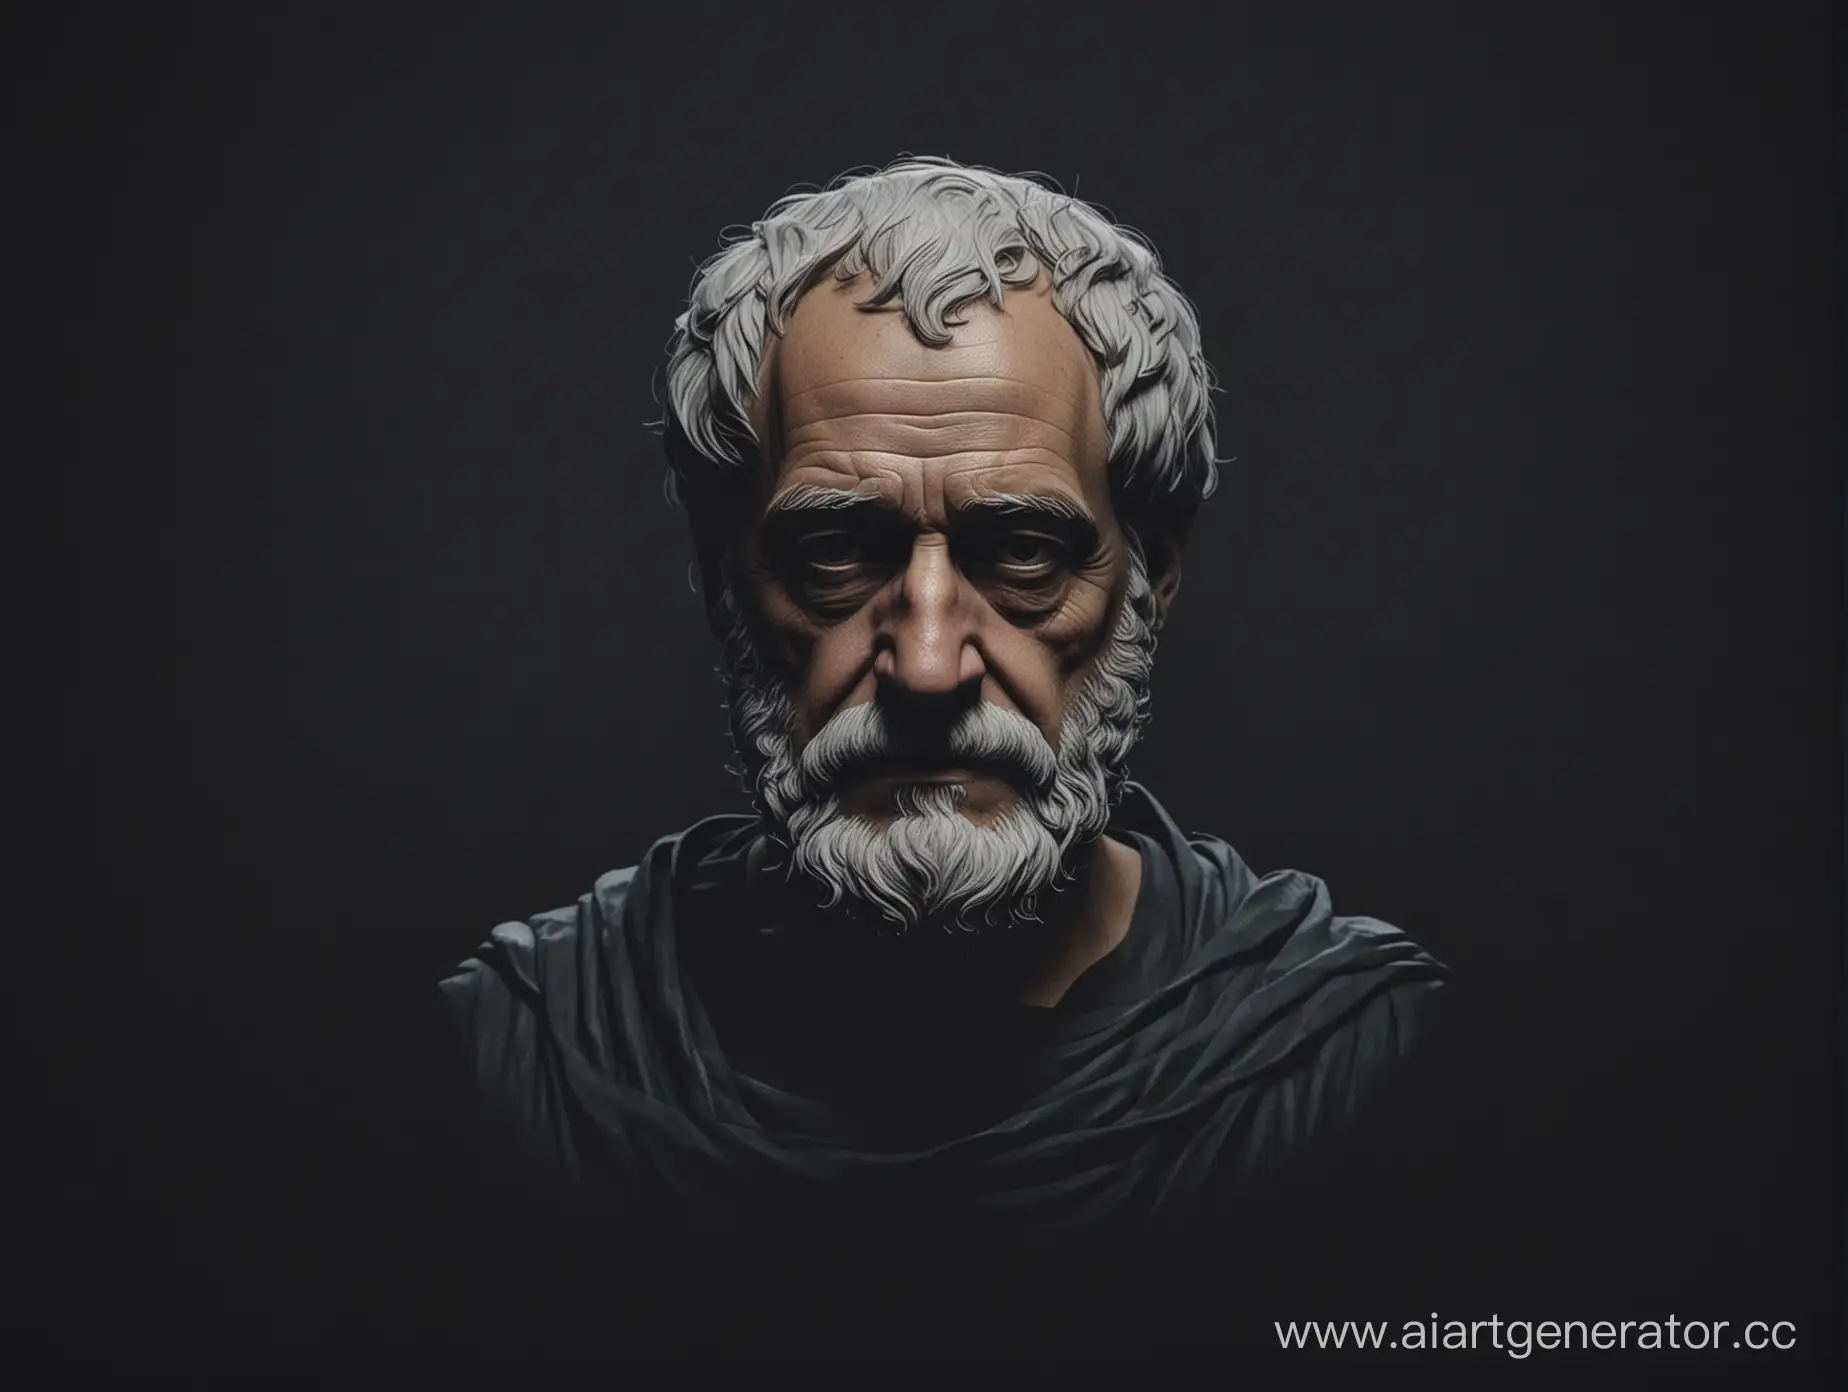 Аристотель на темном фоне, минимализм, 4к, 4:3